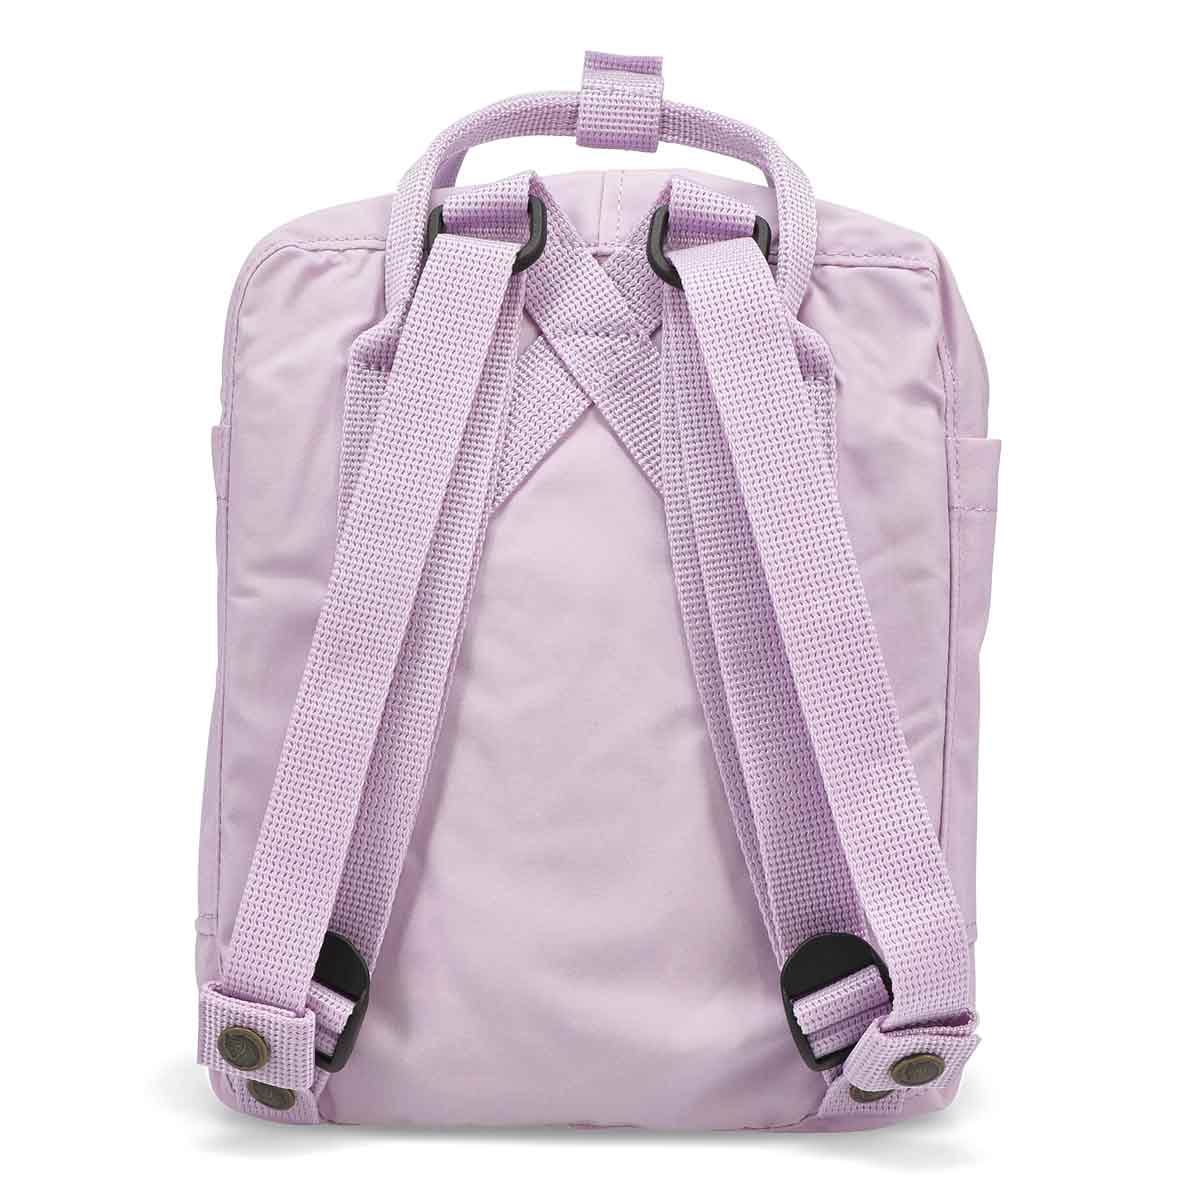 Fjallraven Kanken Mini Backpack - Lavender